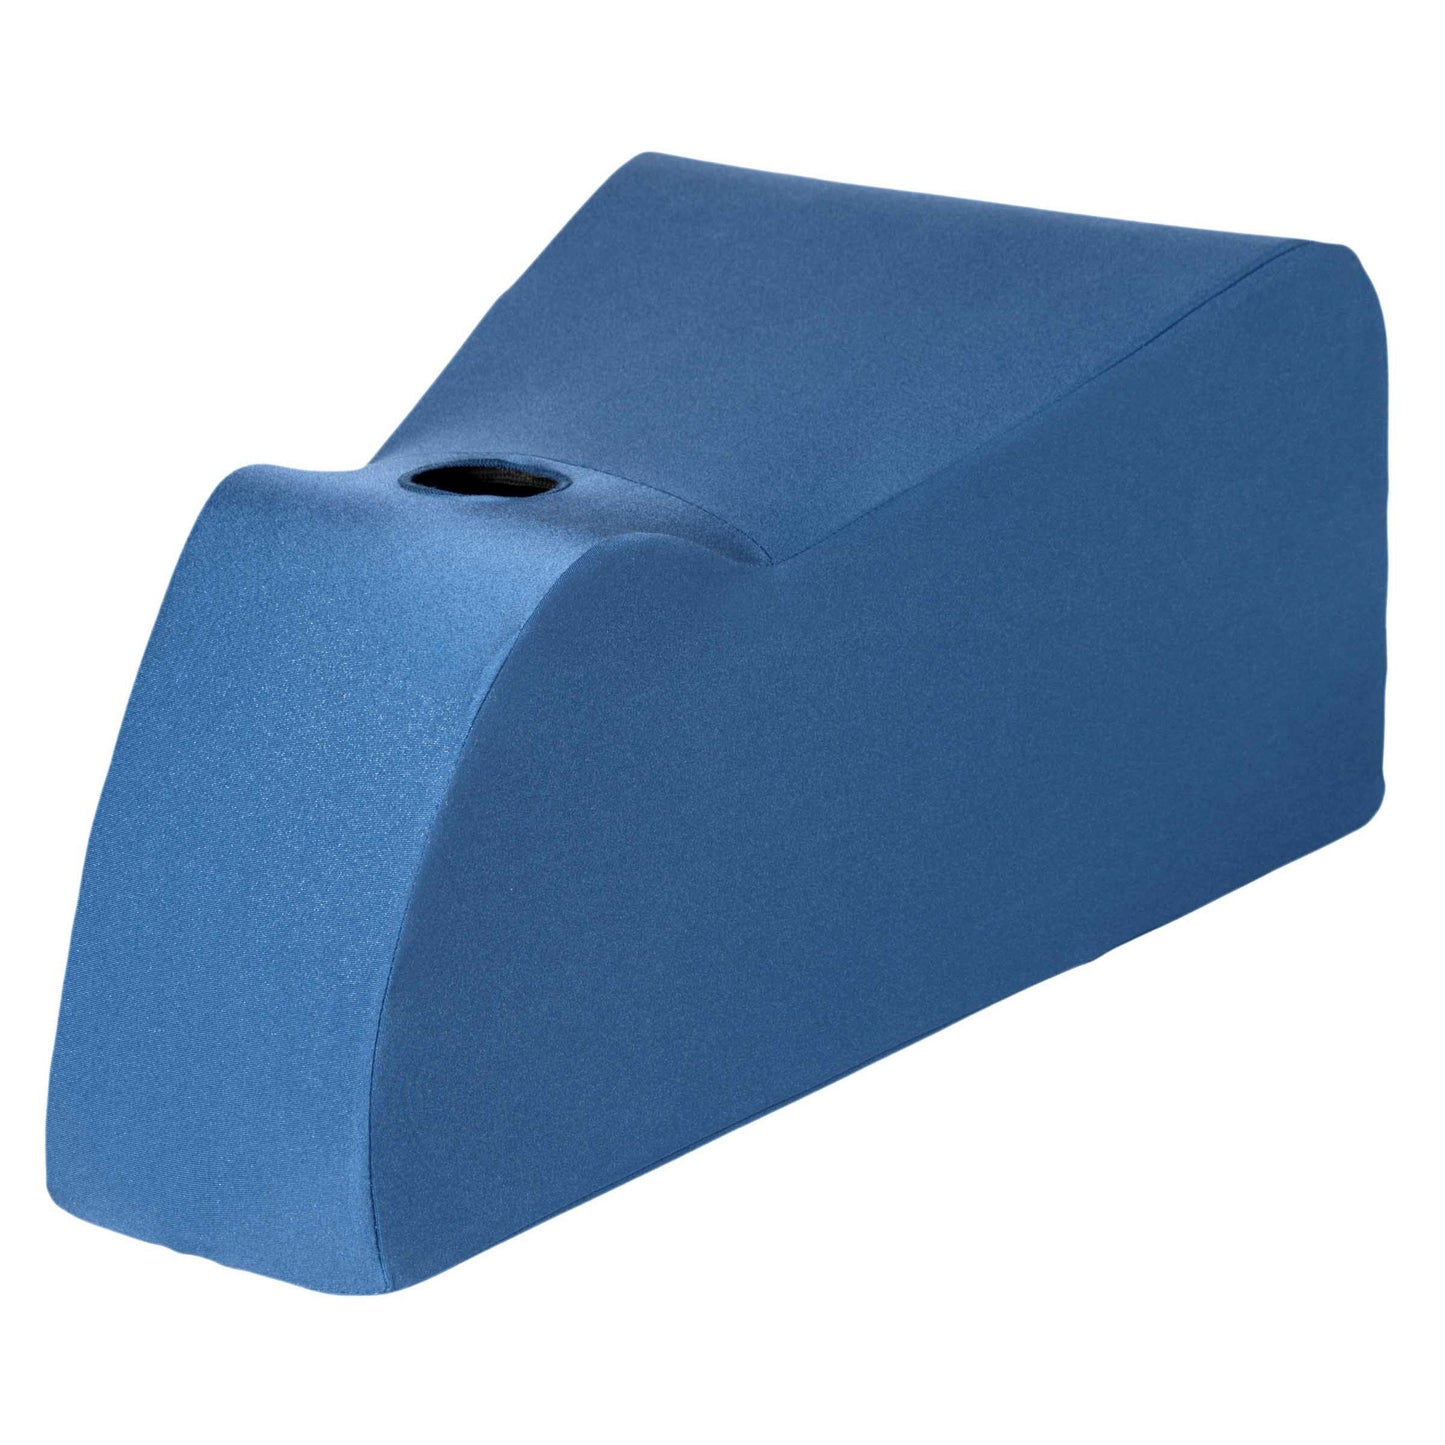 Deluxe Ecsta-Seat Wand Positioning Cushion - UABDSM